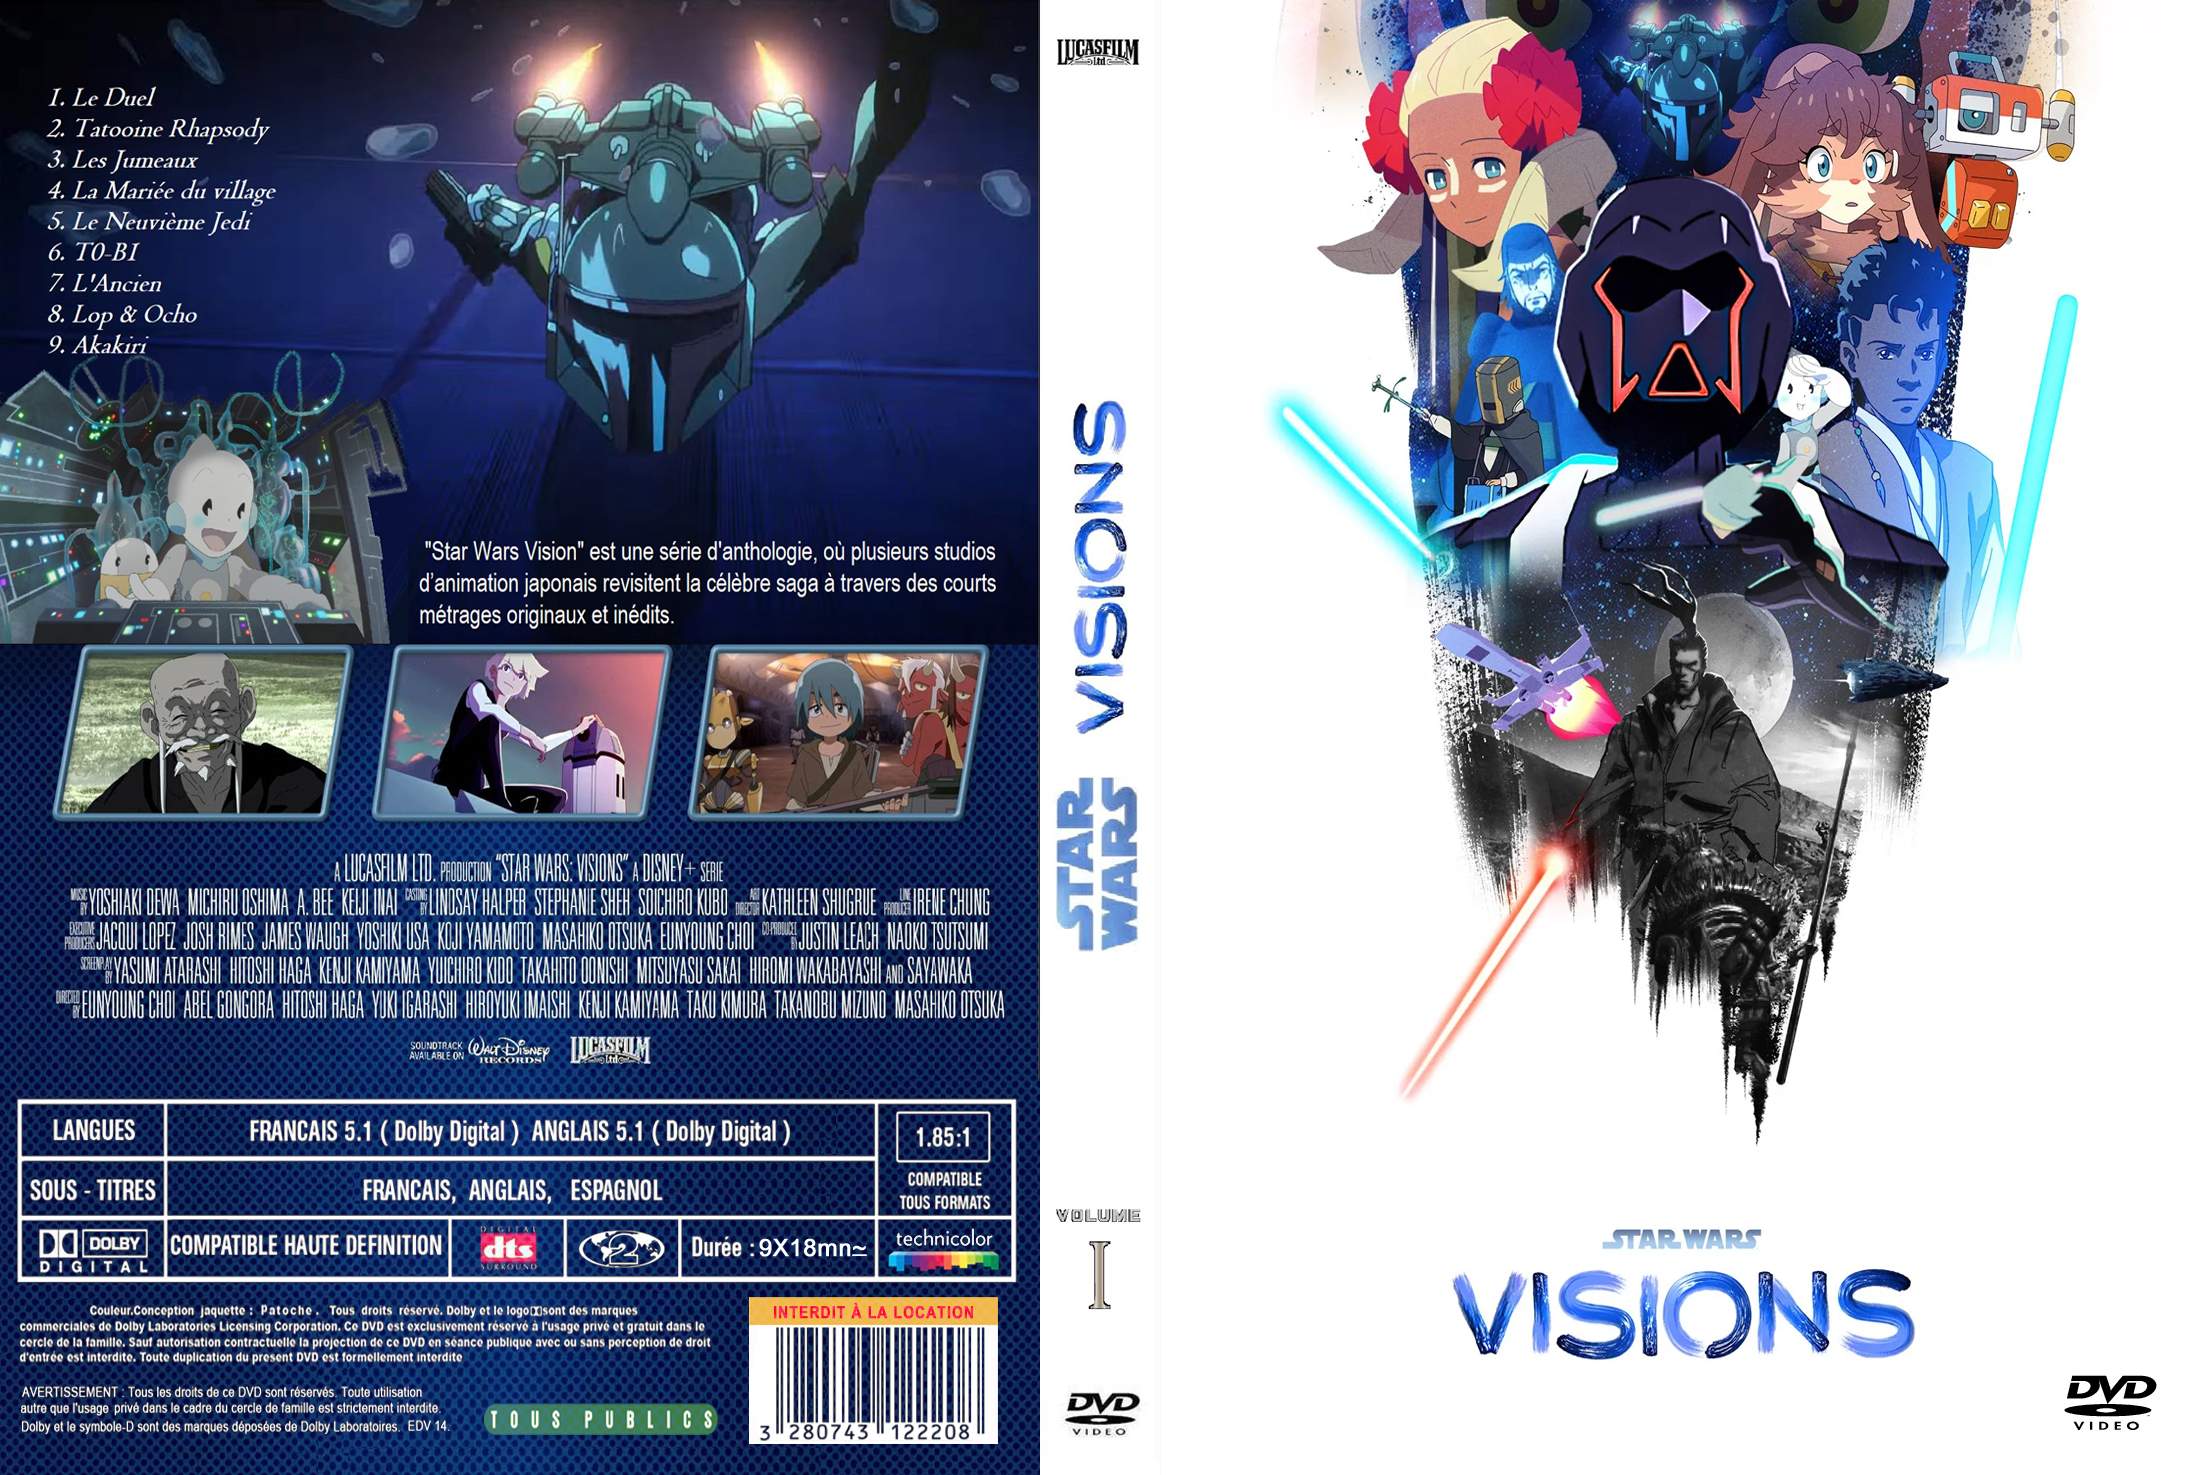 Jaquette DVD Star Wars Visions Saison 1 custom